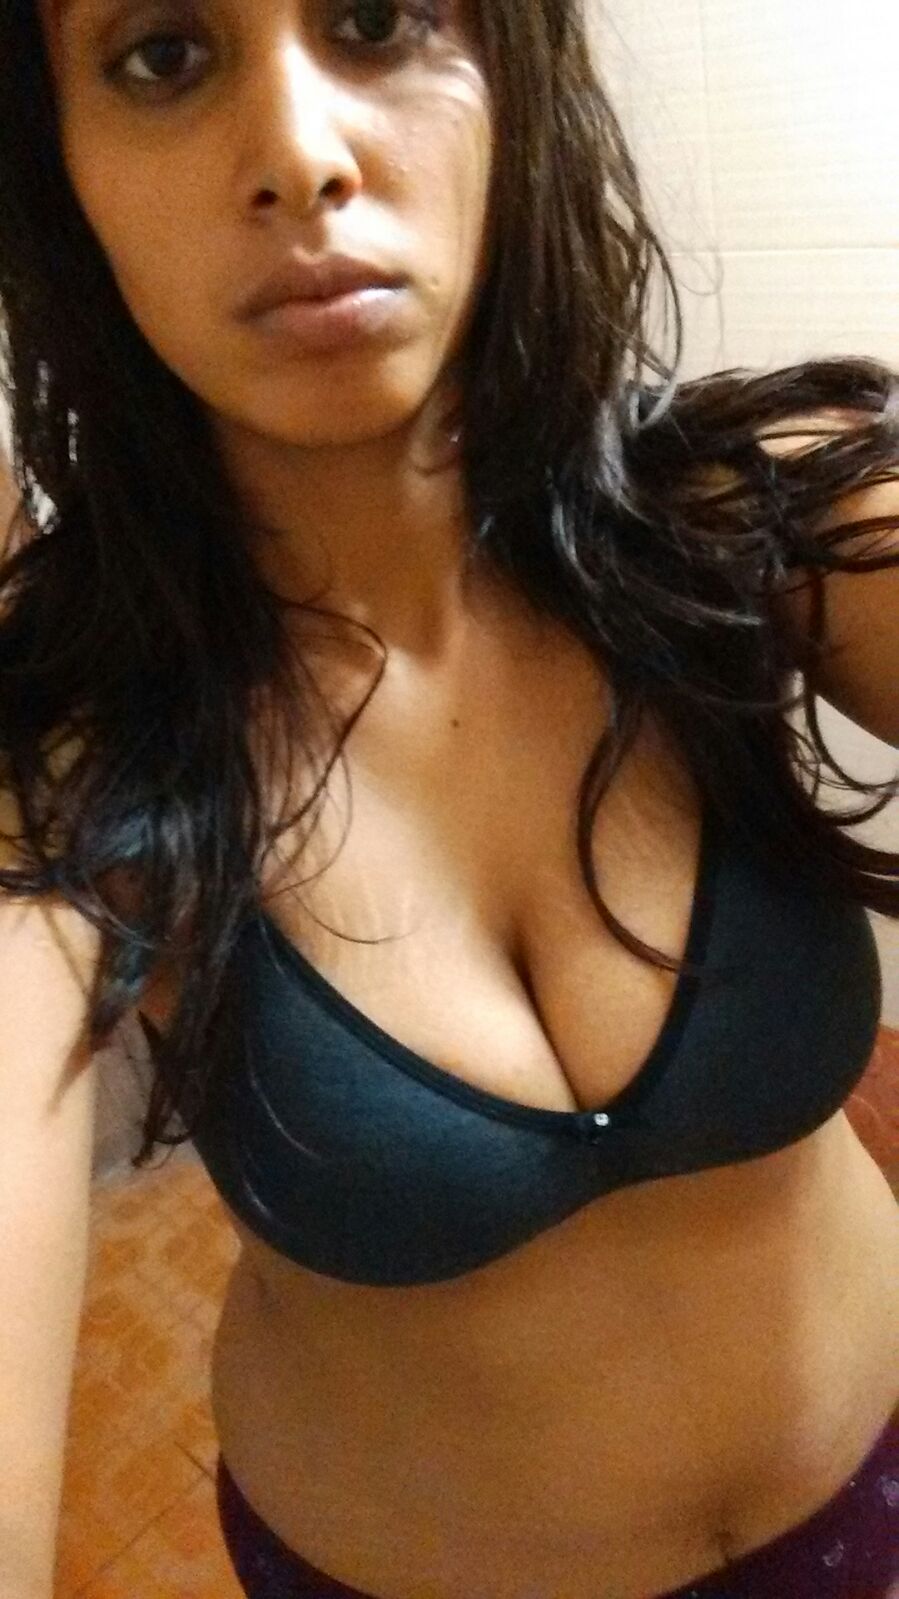 Black Slim With Big Boobs - Sexy Slim Indian College Girl Nude Big Boobs XXX Photos